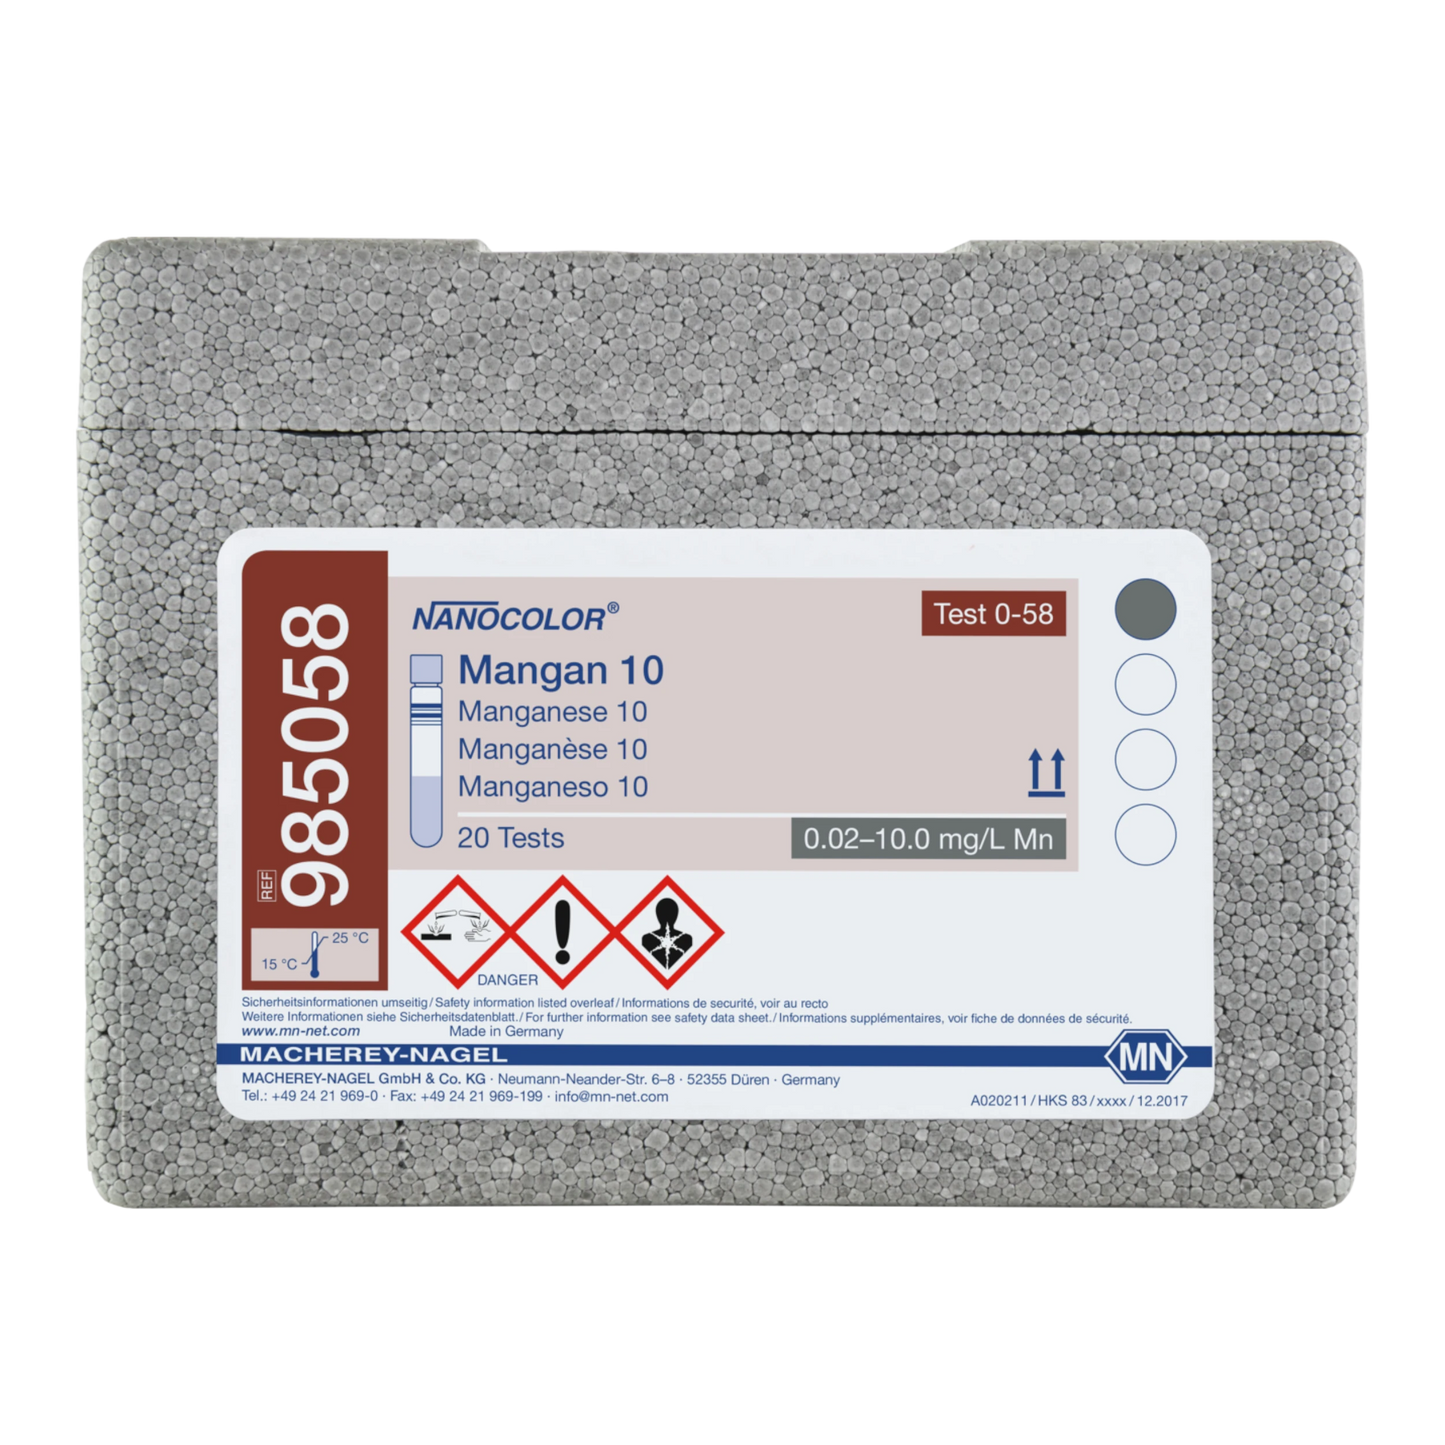 MACHEREY-NAGEL NANOCOLOR Rundküvettentest Mangan 10 (985058)